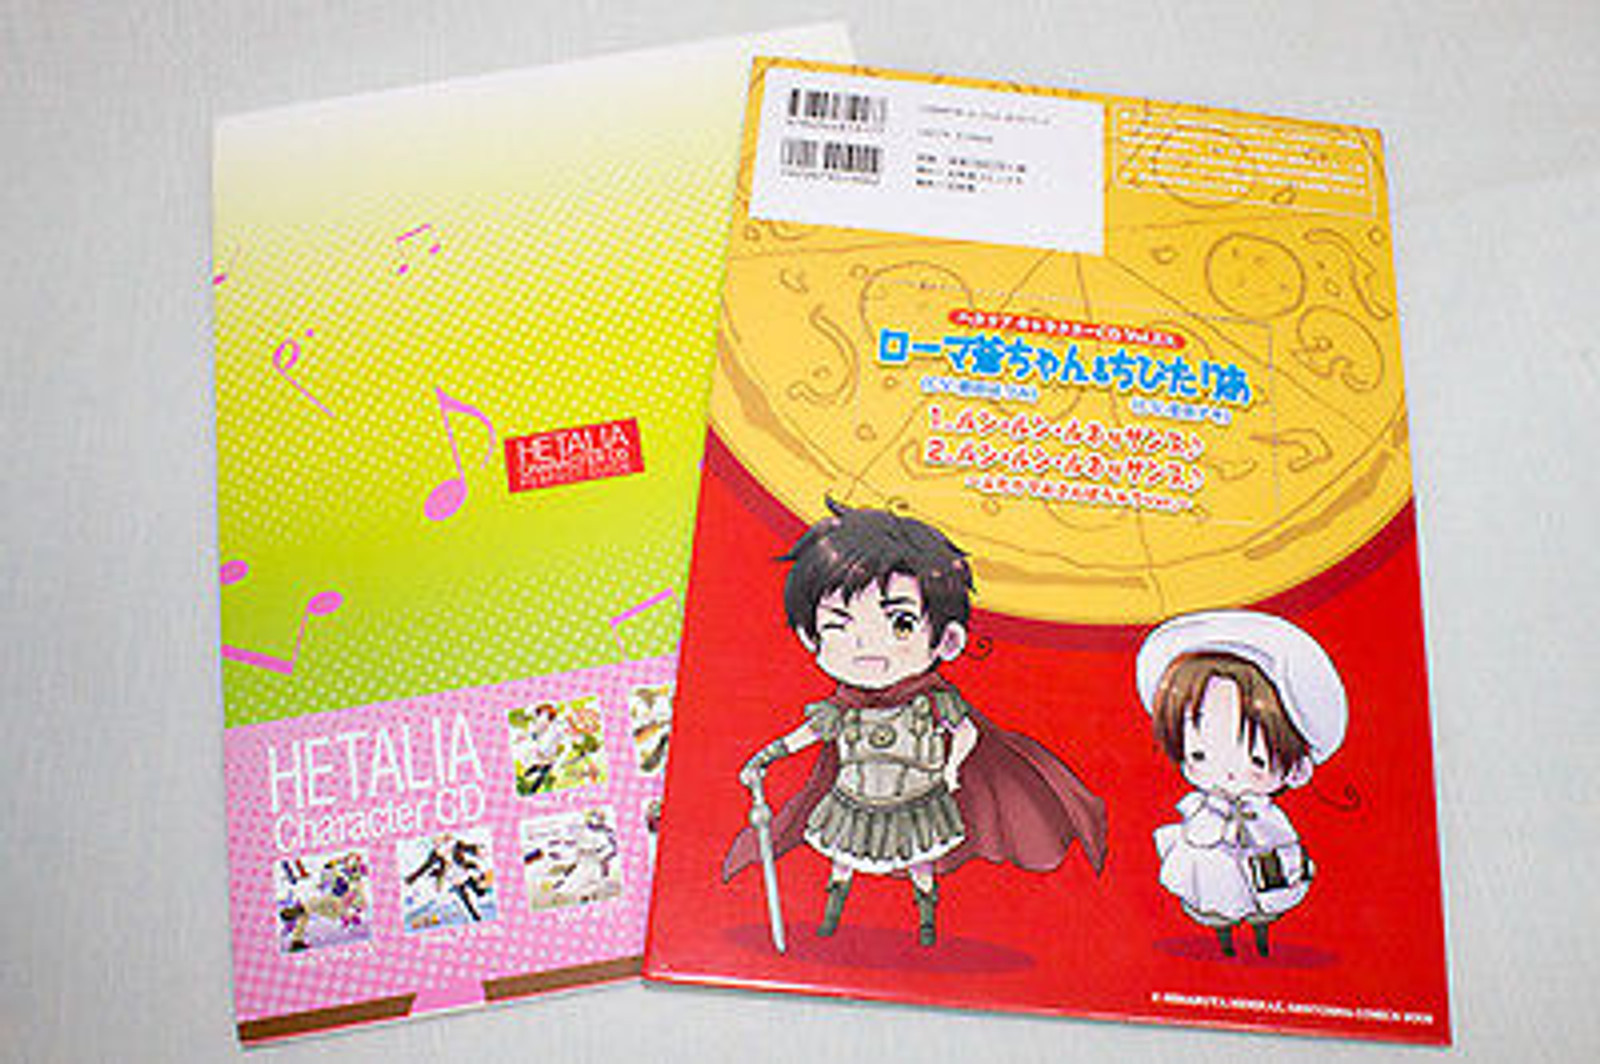 Hetalia Character CD Complete Guide Book With CD JAPAN ANIME MANGA